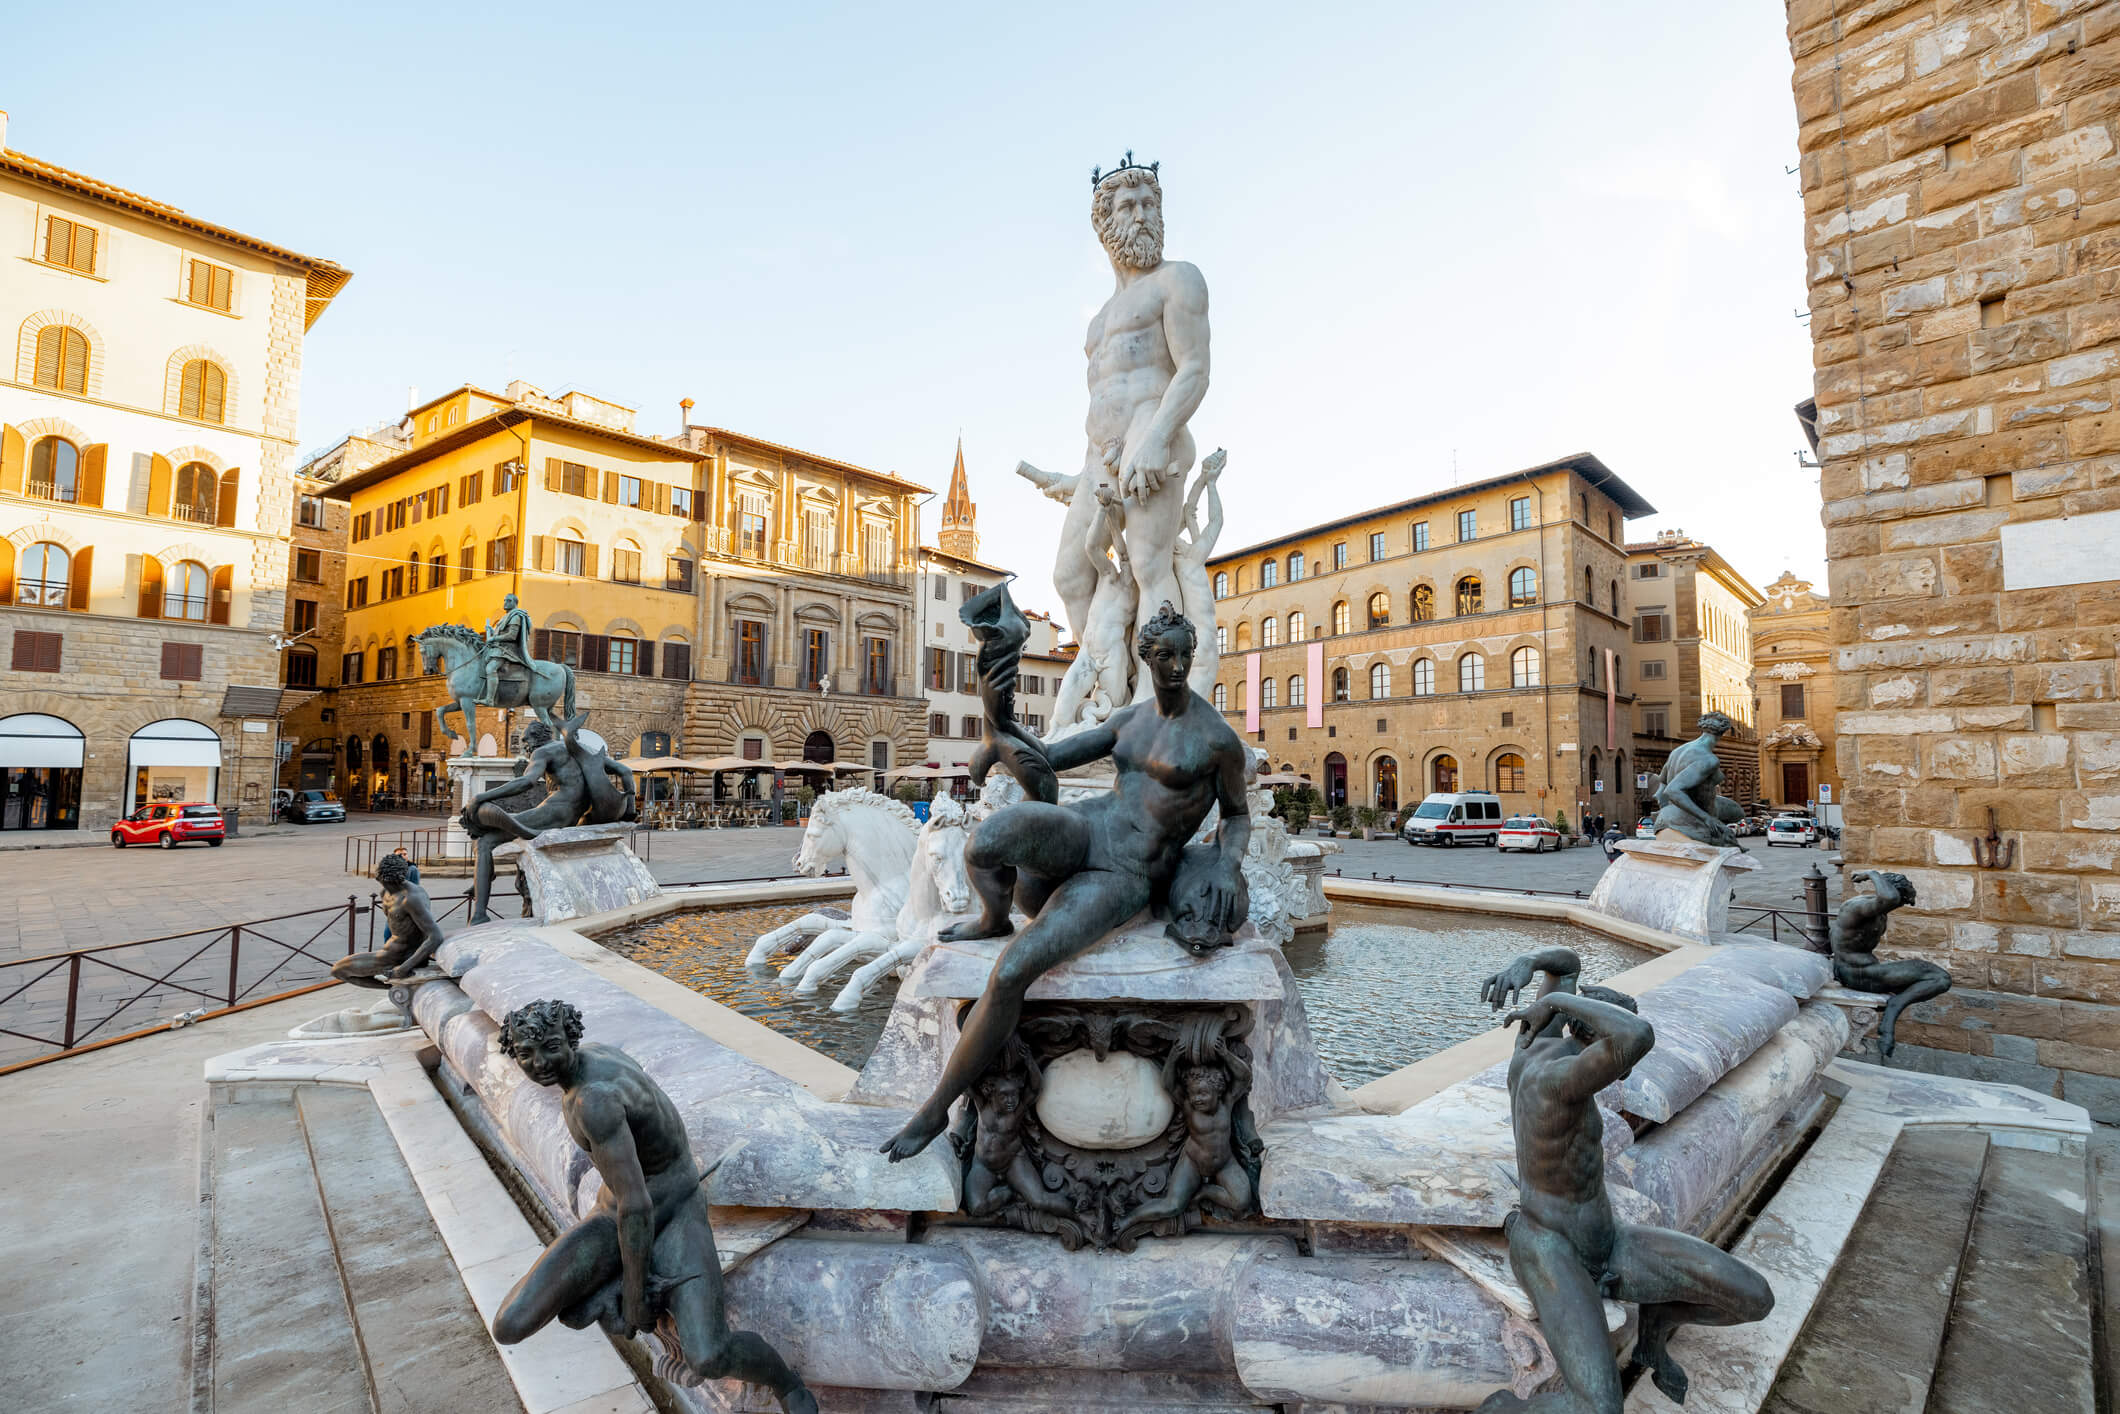 Sculptures in public square in Italy